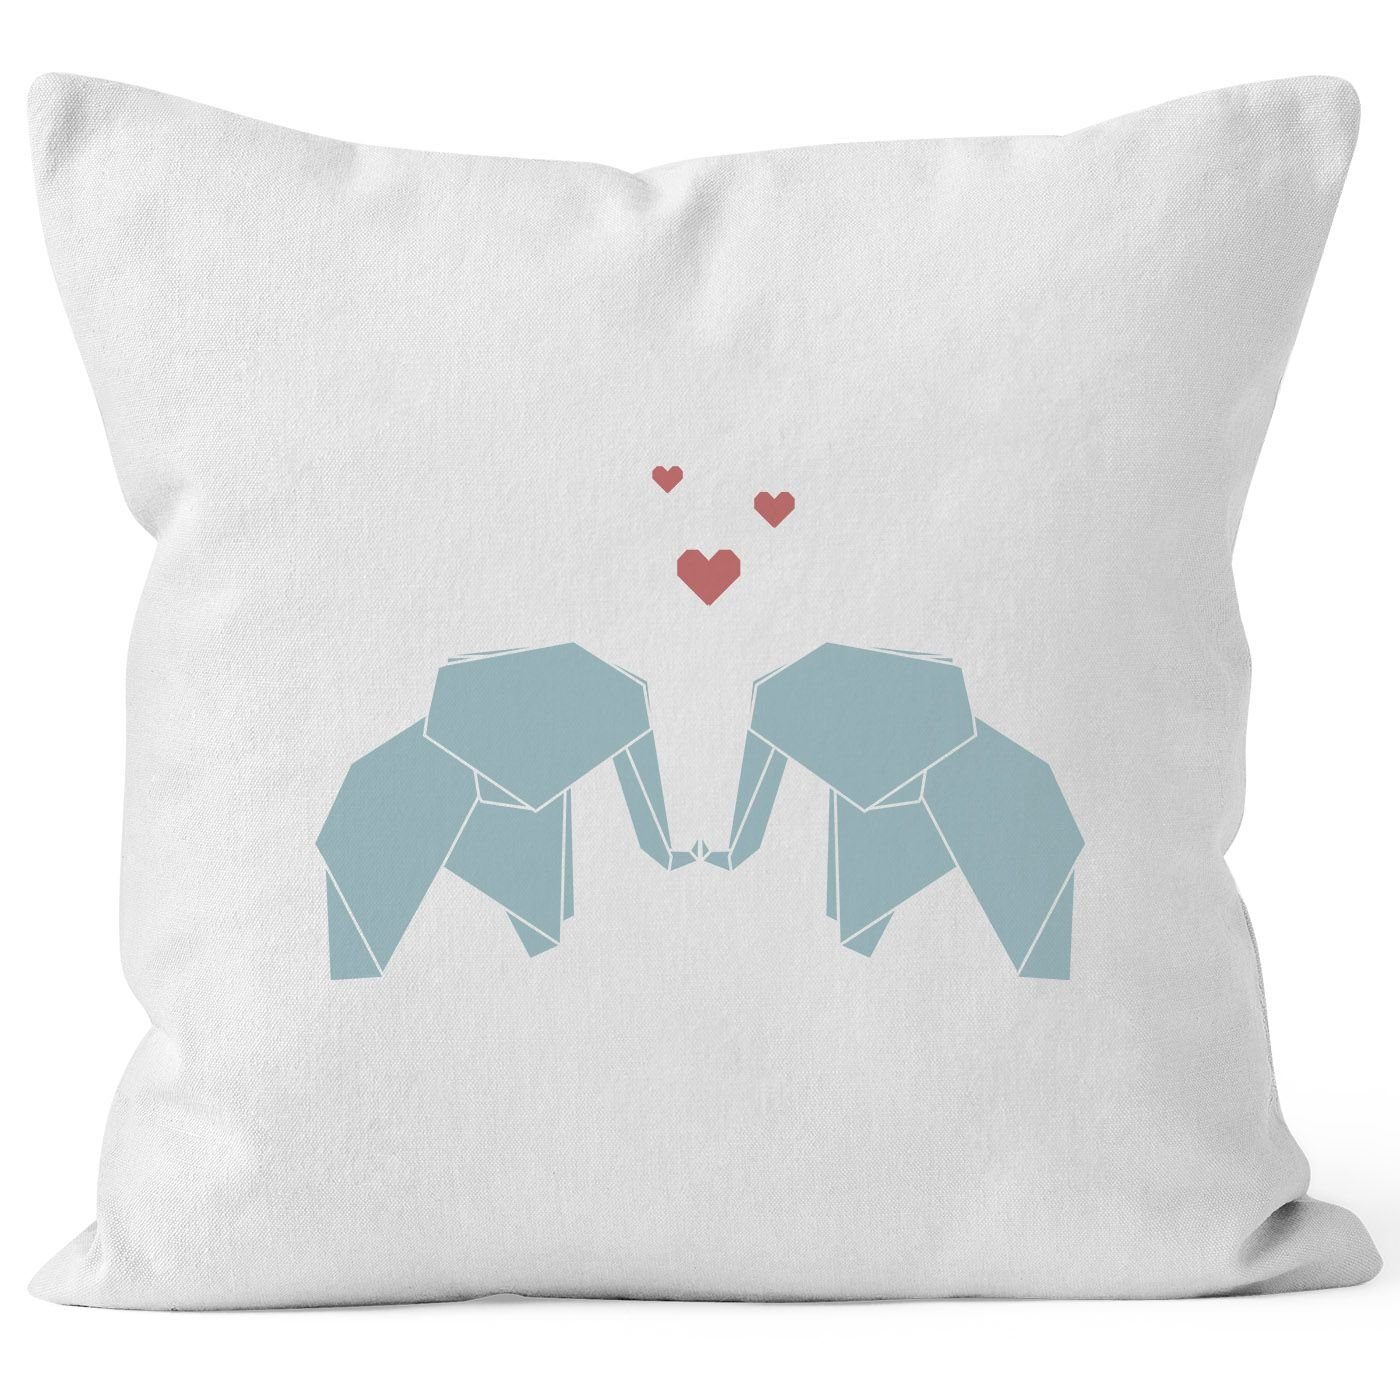 MoonWorks® Deko-Kissen Paar Elefanten Kissenbezug weiß verliebt Dekokissen Baumwolle Kissen-Hülle Pärchen Liebe MoonWorks Origami